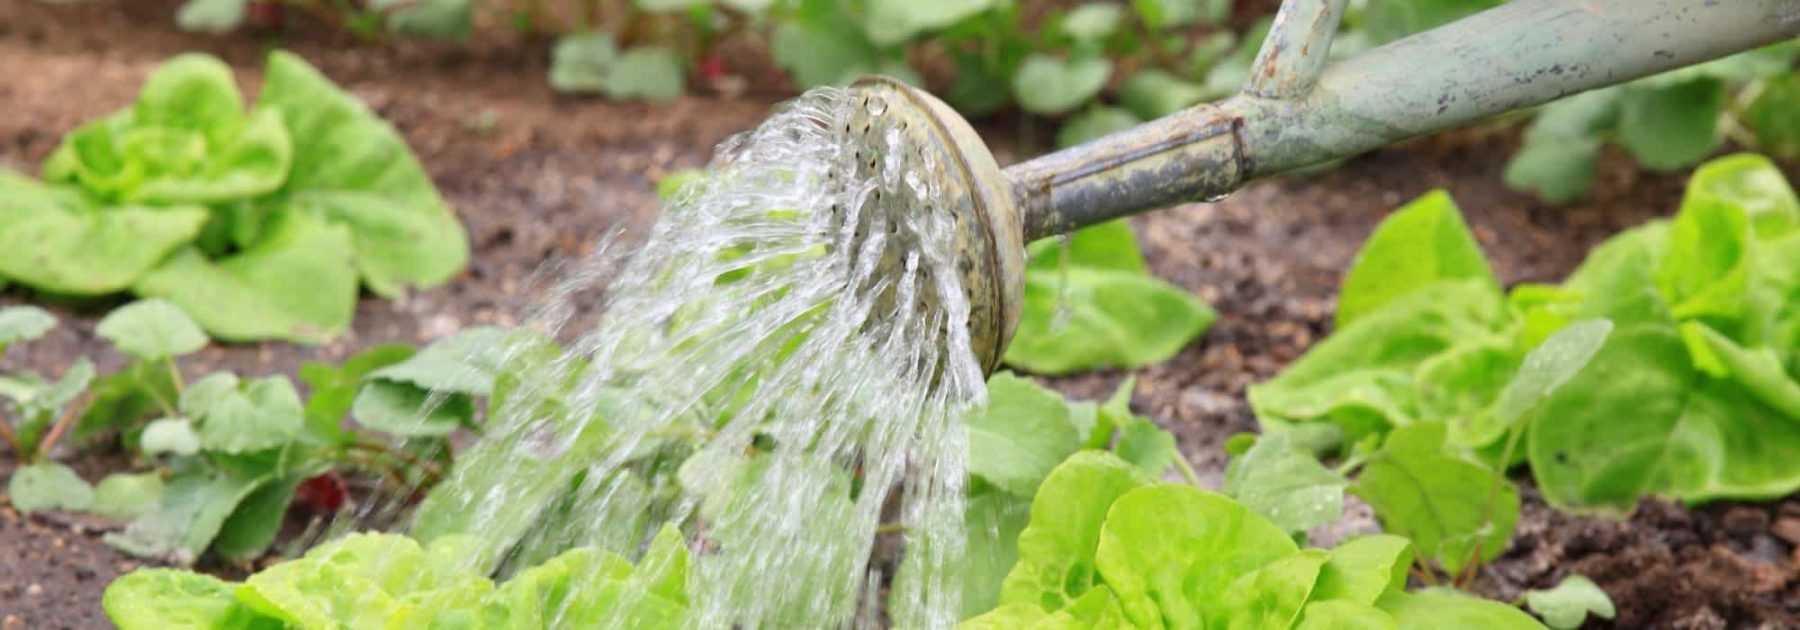 L'eau au jardin : six conseils antigaspi